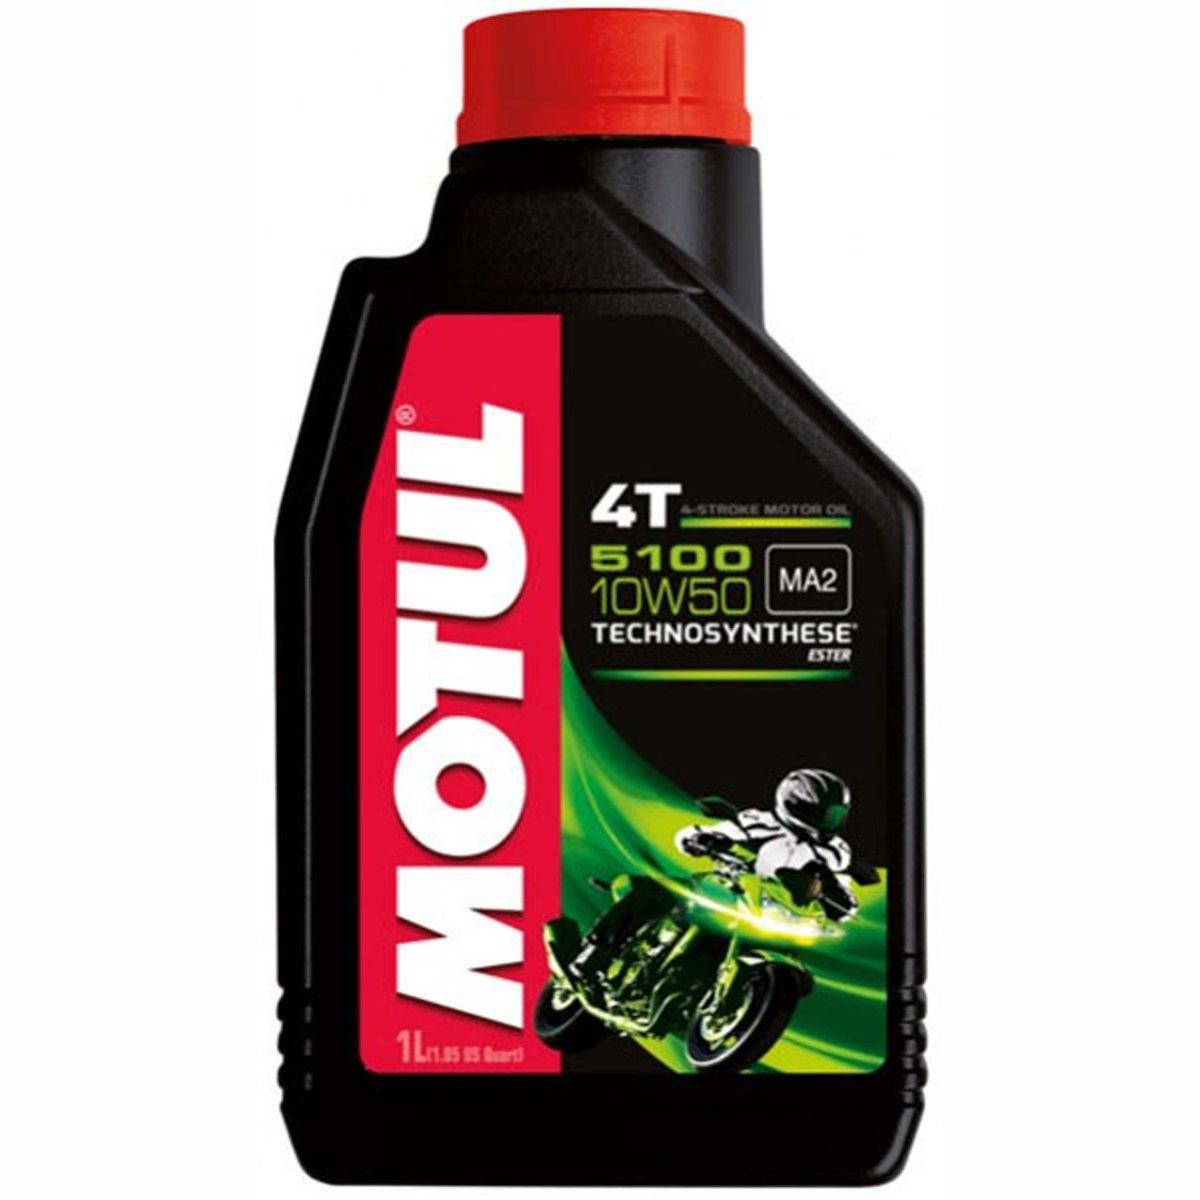 Motul Semi-Synthetic 5100 10W50 4T Oil Black 4L